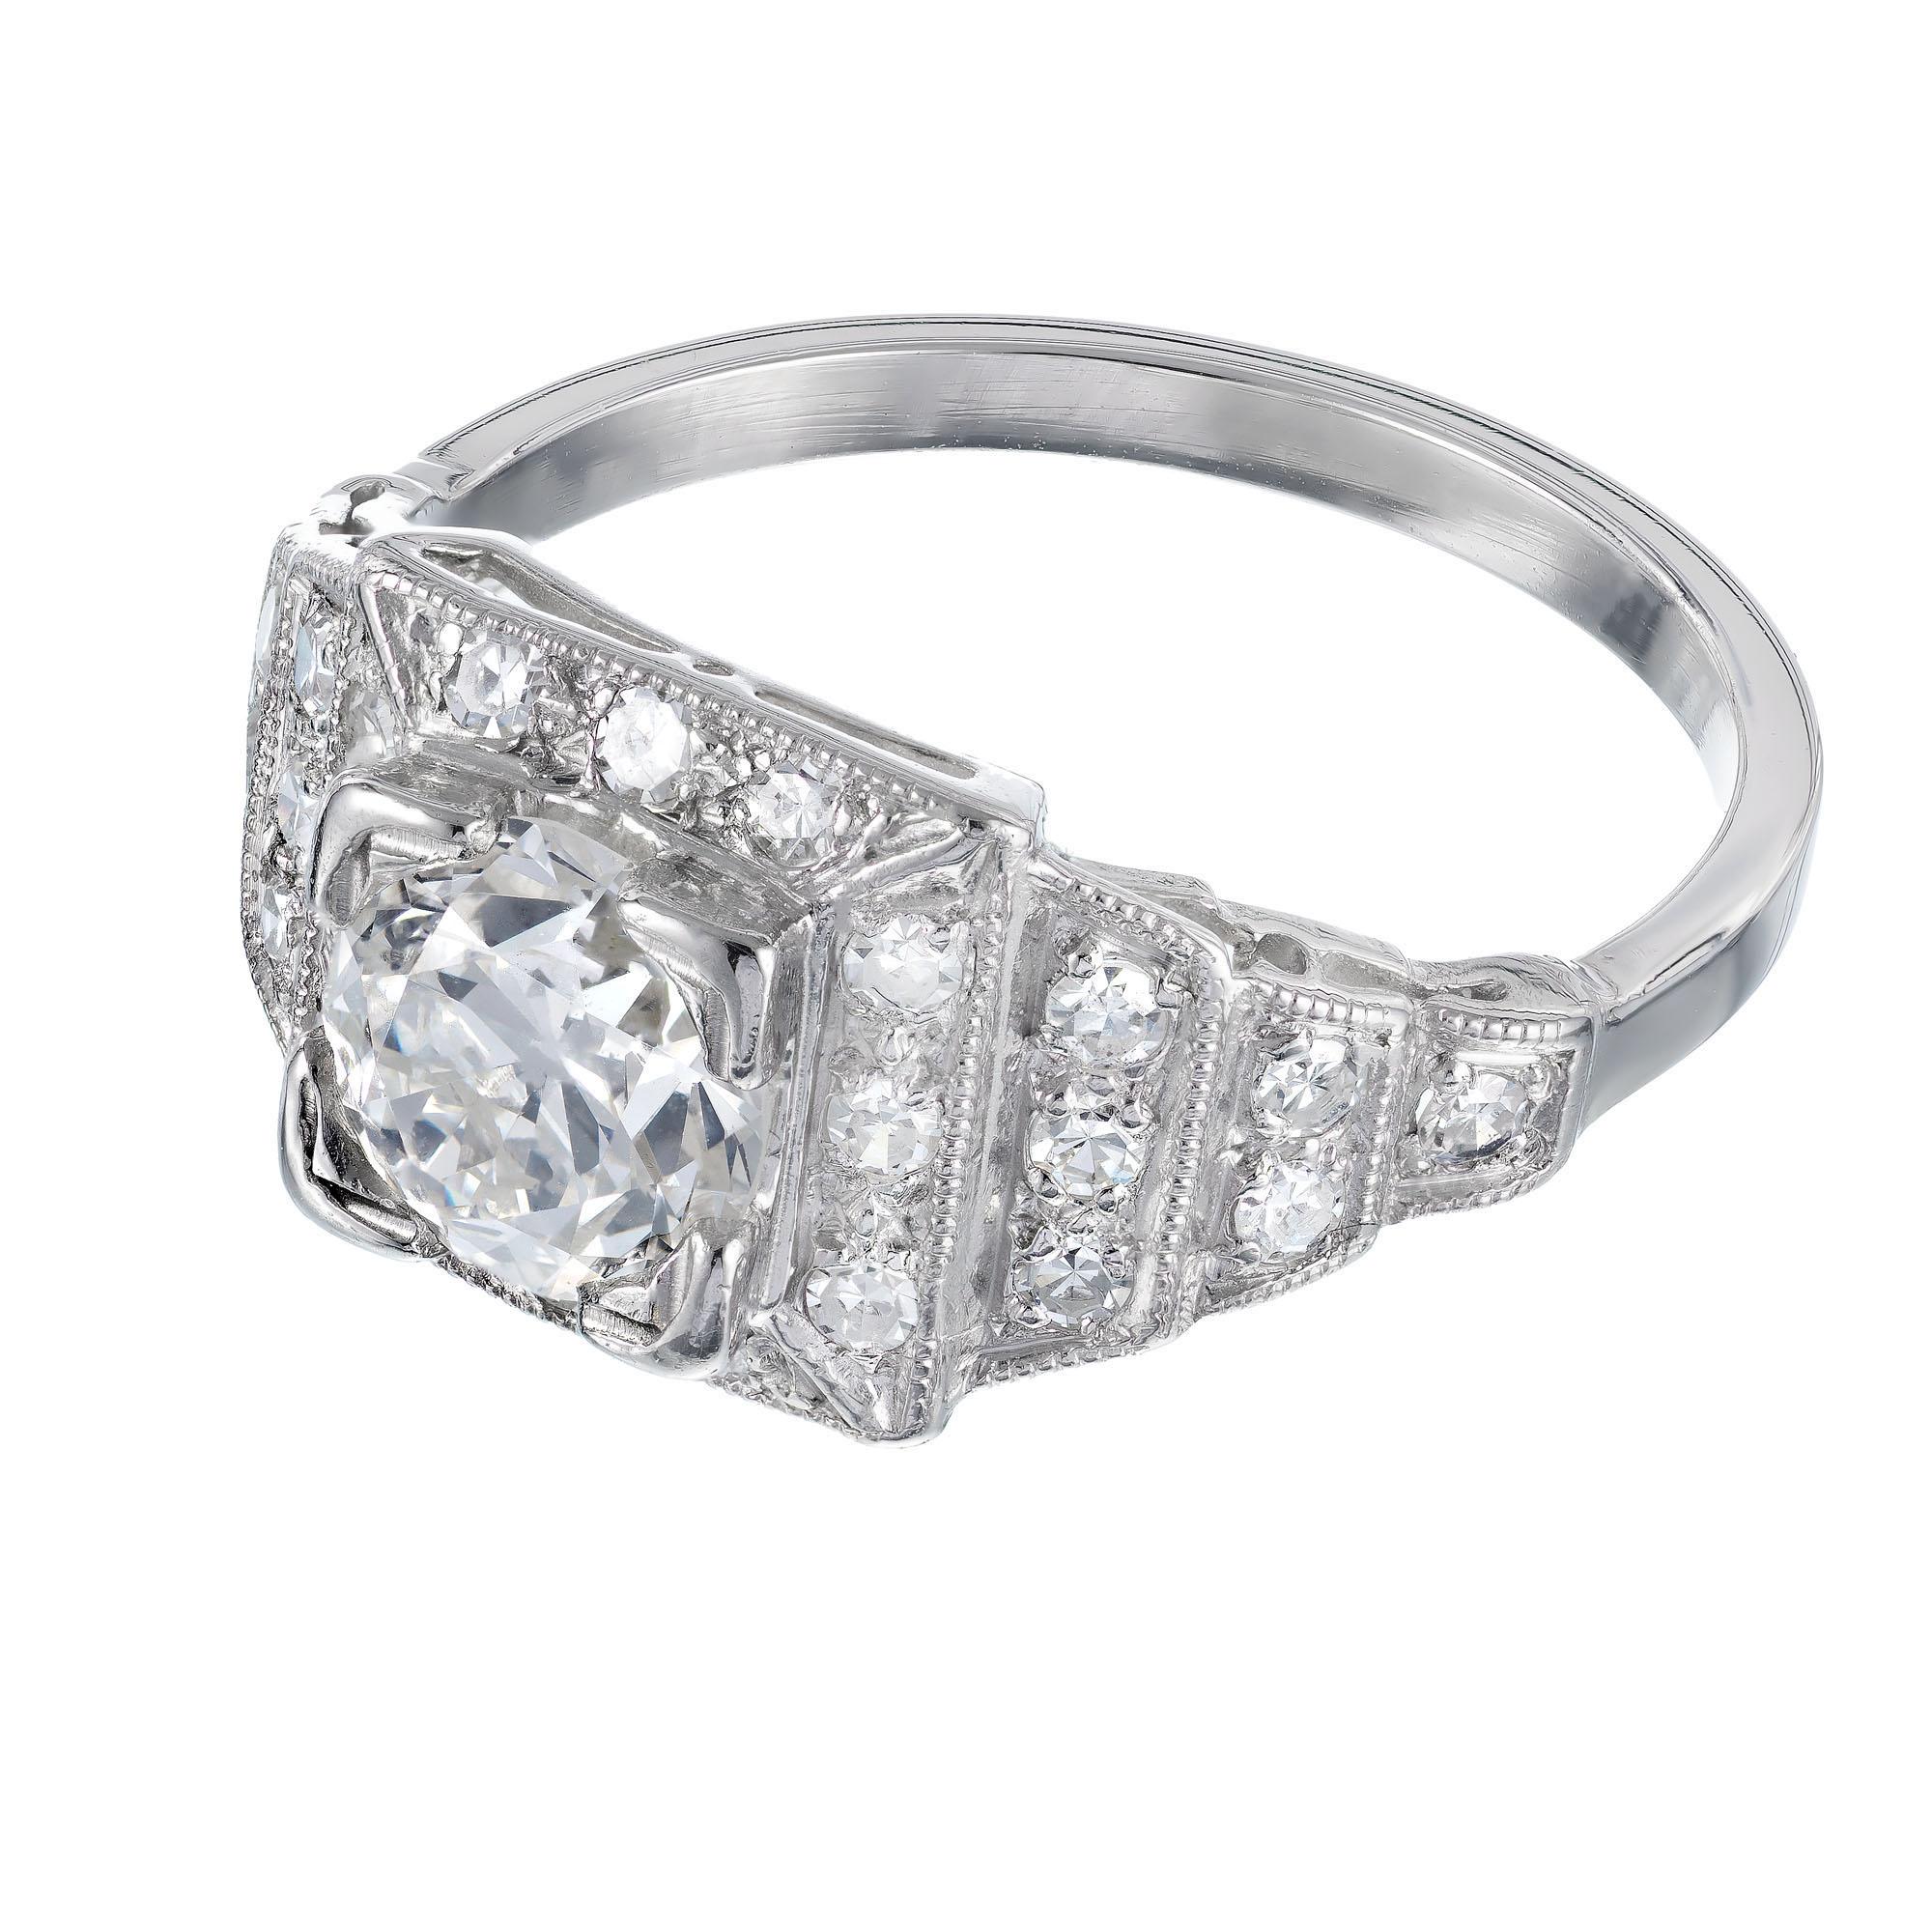 Original Platinum step design Art Deco diamond engagement ring. Circa 1920's. EGL certified center stone.

1 old European cut diamond 1.11ct, F-G, VS2. Depth: 62.4% Table: 55%.Strong blue florescence EGL # US58492701D
24 round transitional single